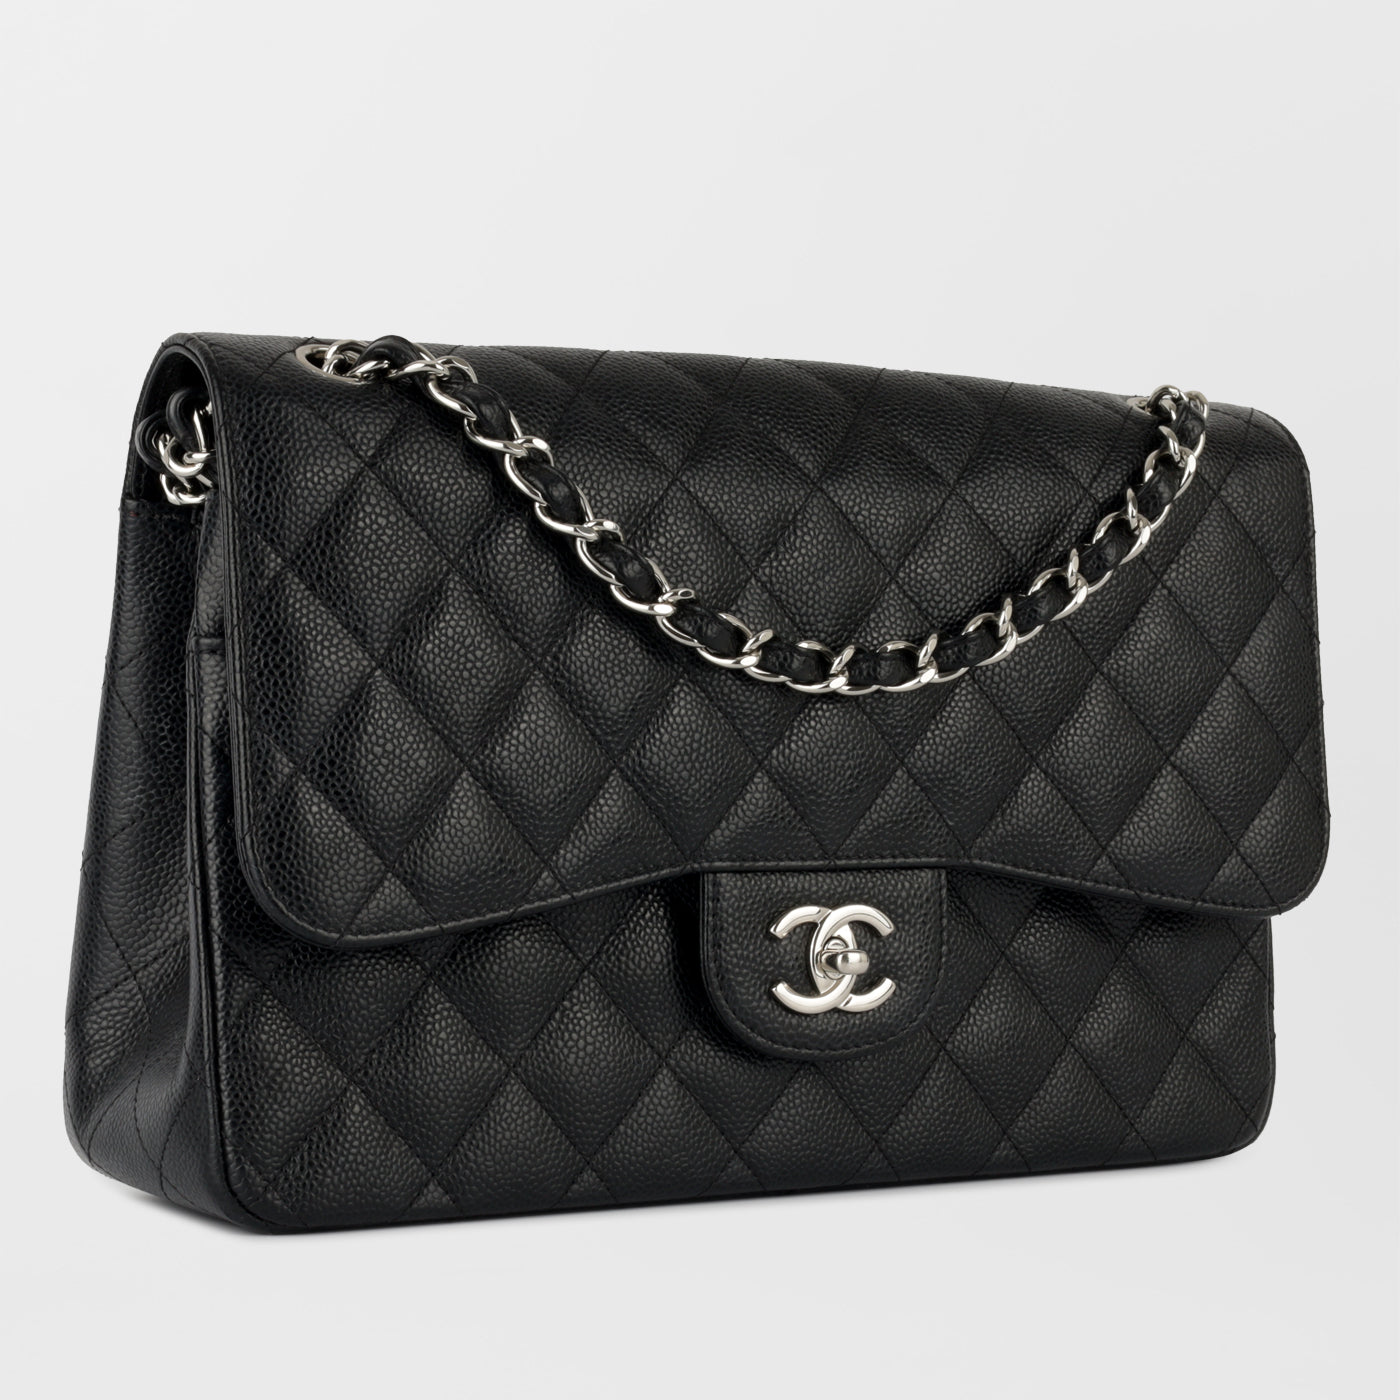 Chanel - Classic Flap Bag - Jumbo - Black Lambskin - SHW